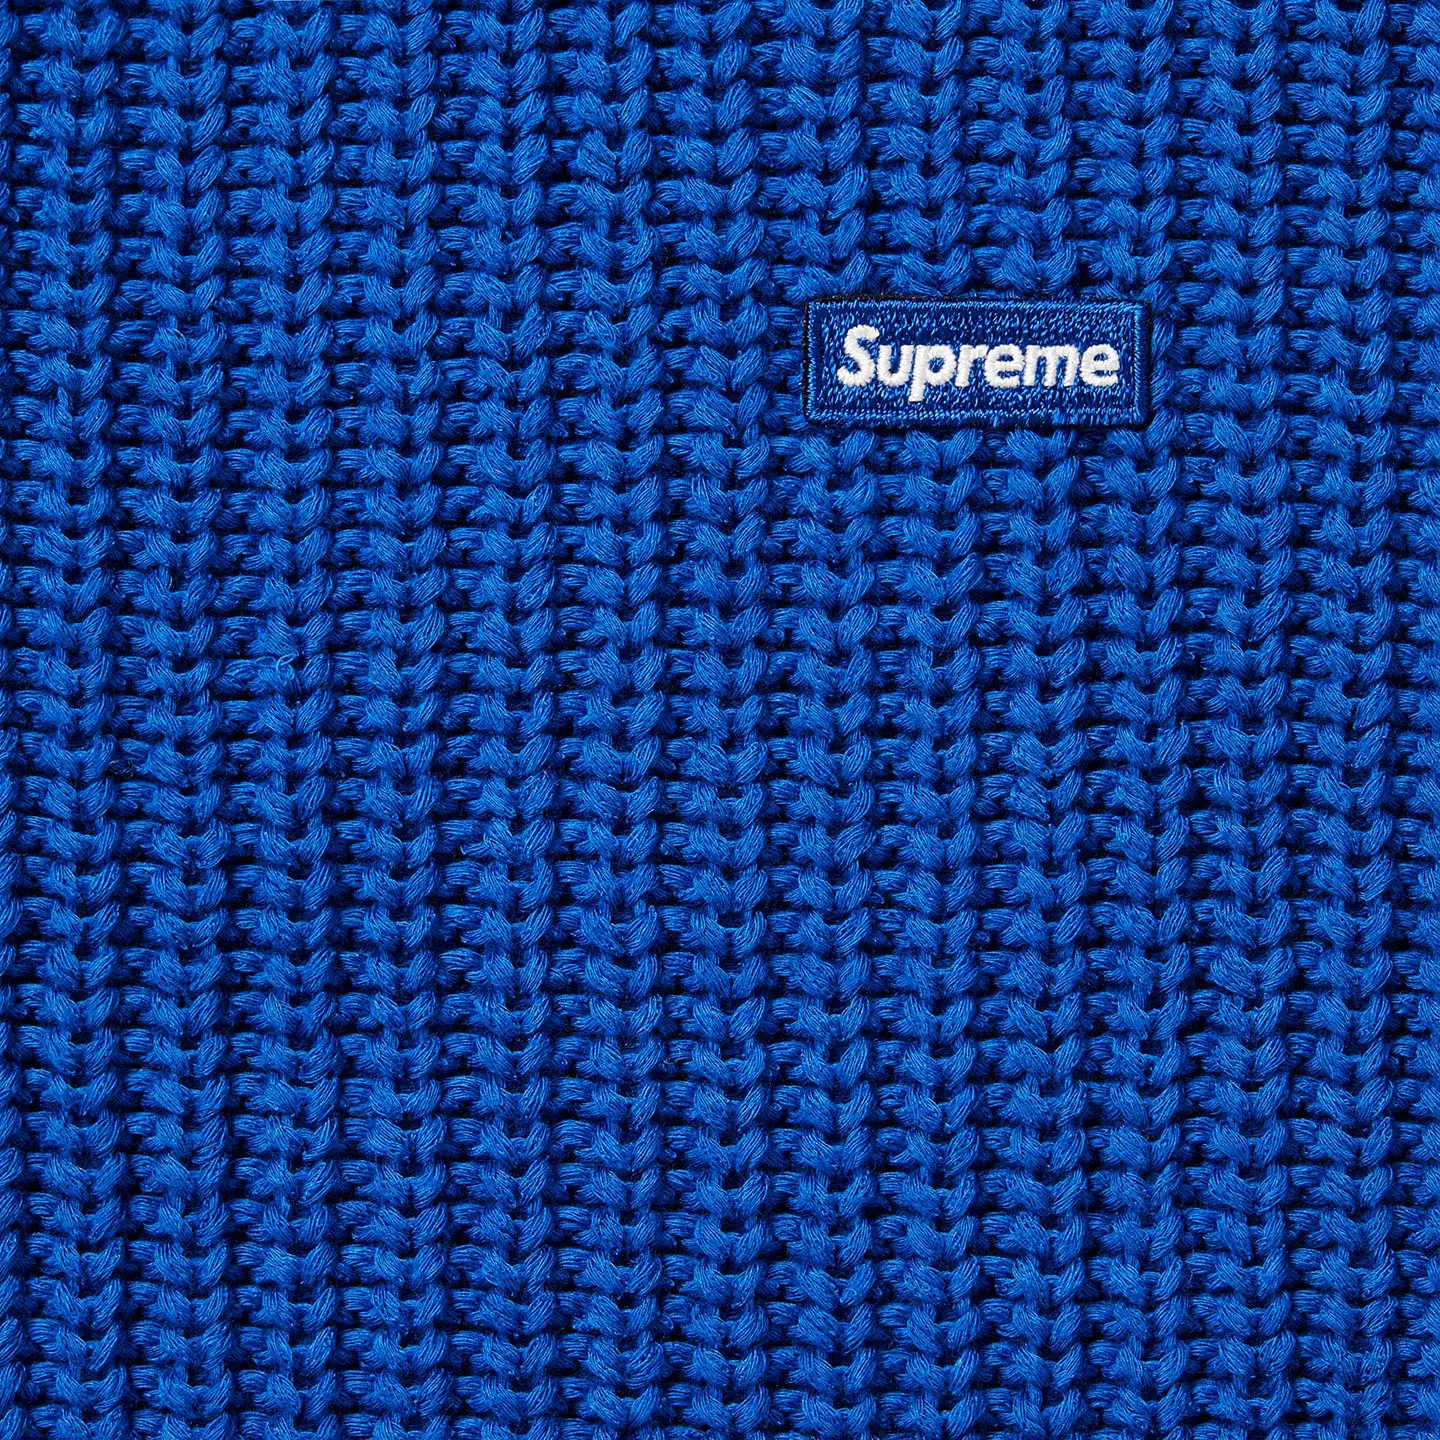 Supreme Small Box Ribbed Sweater